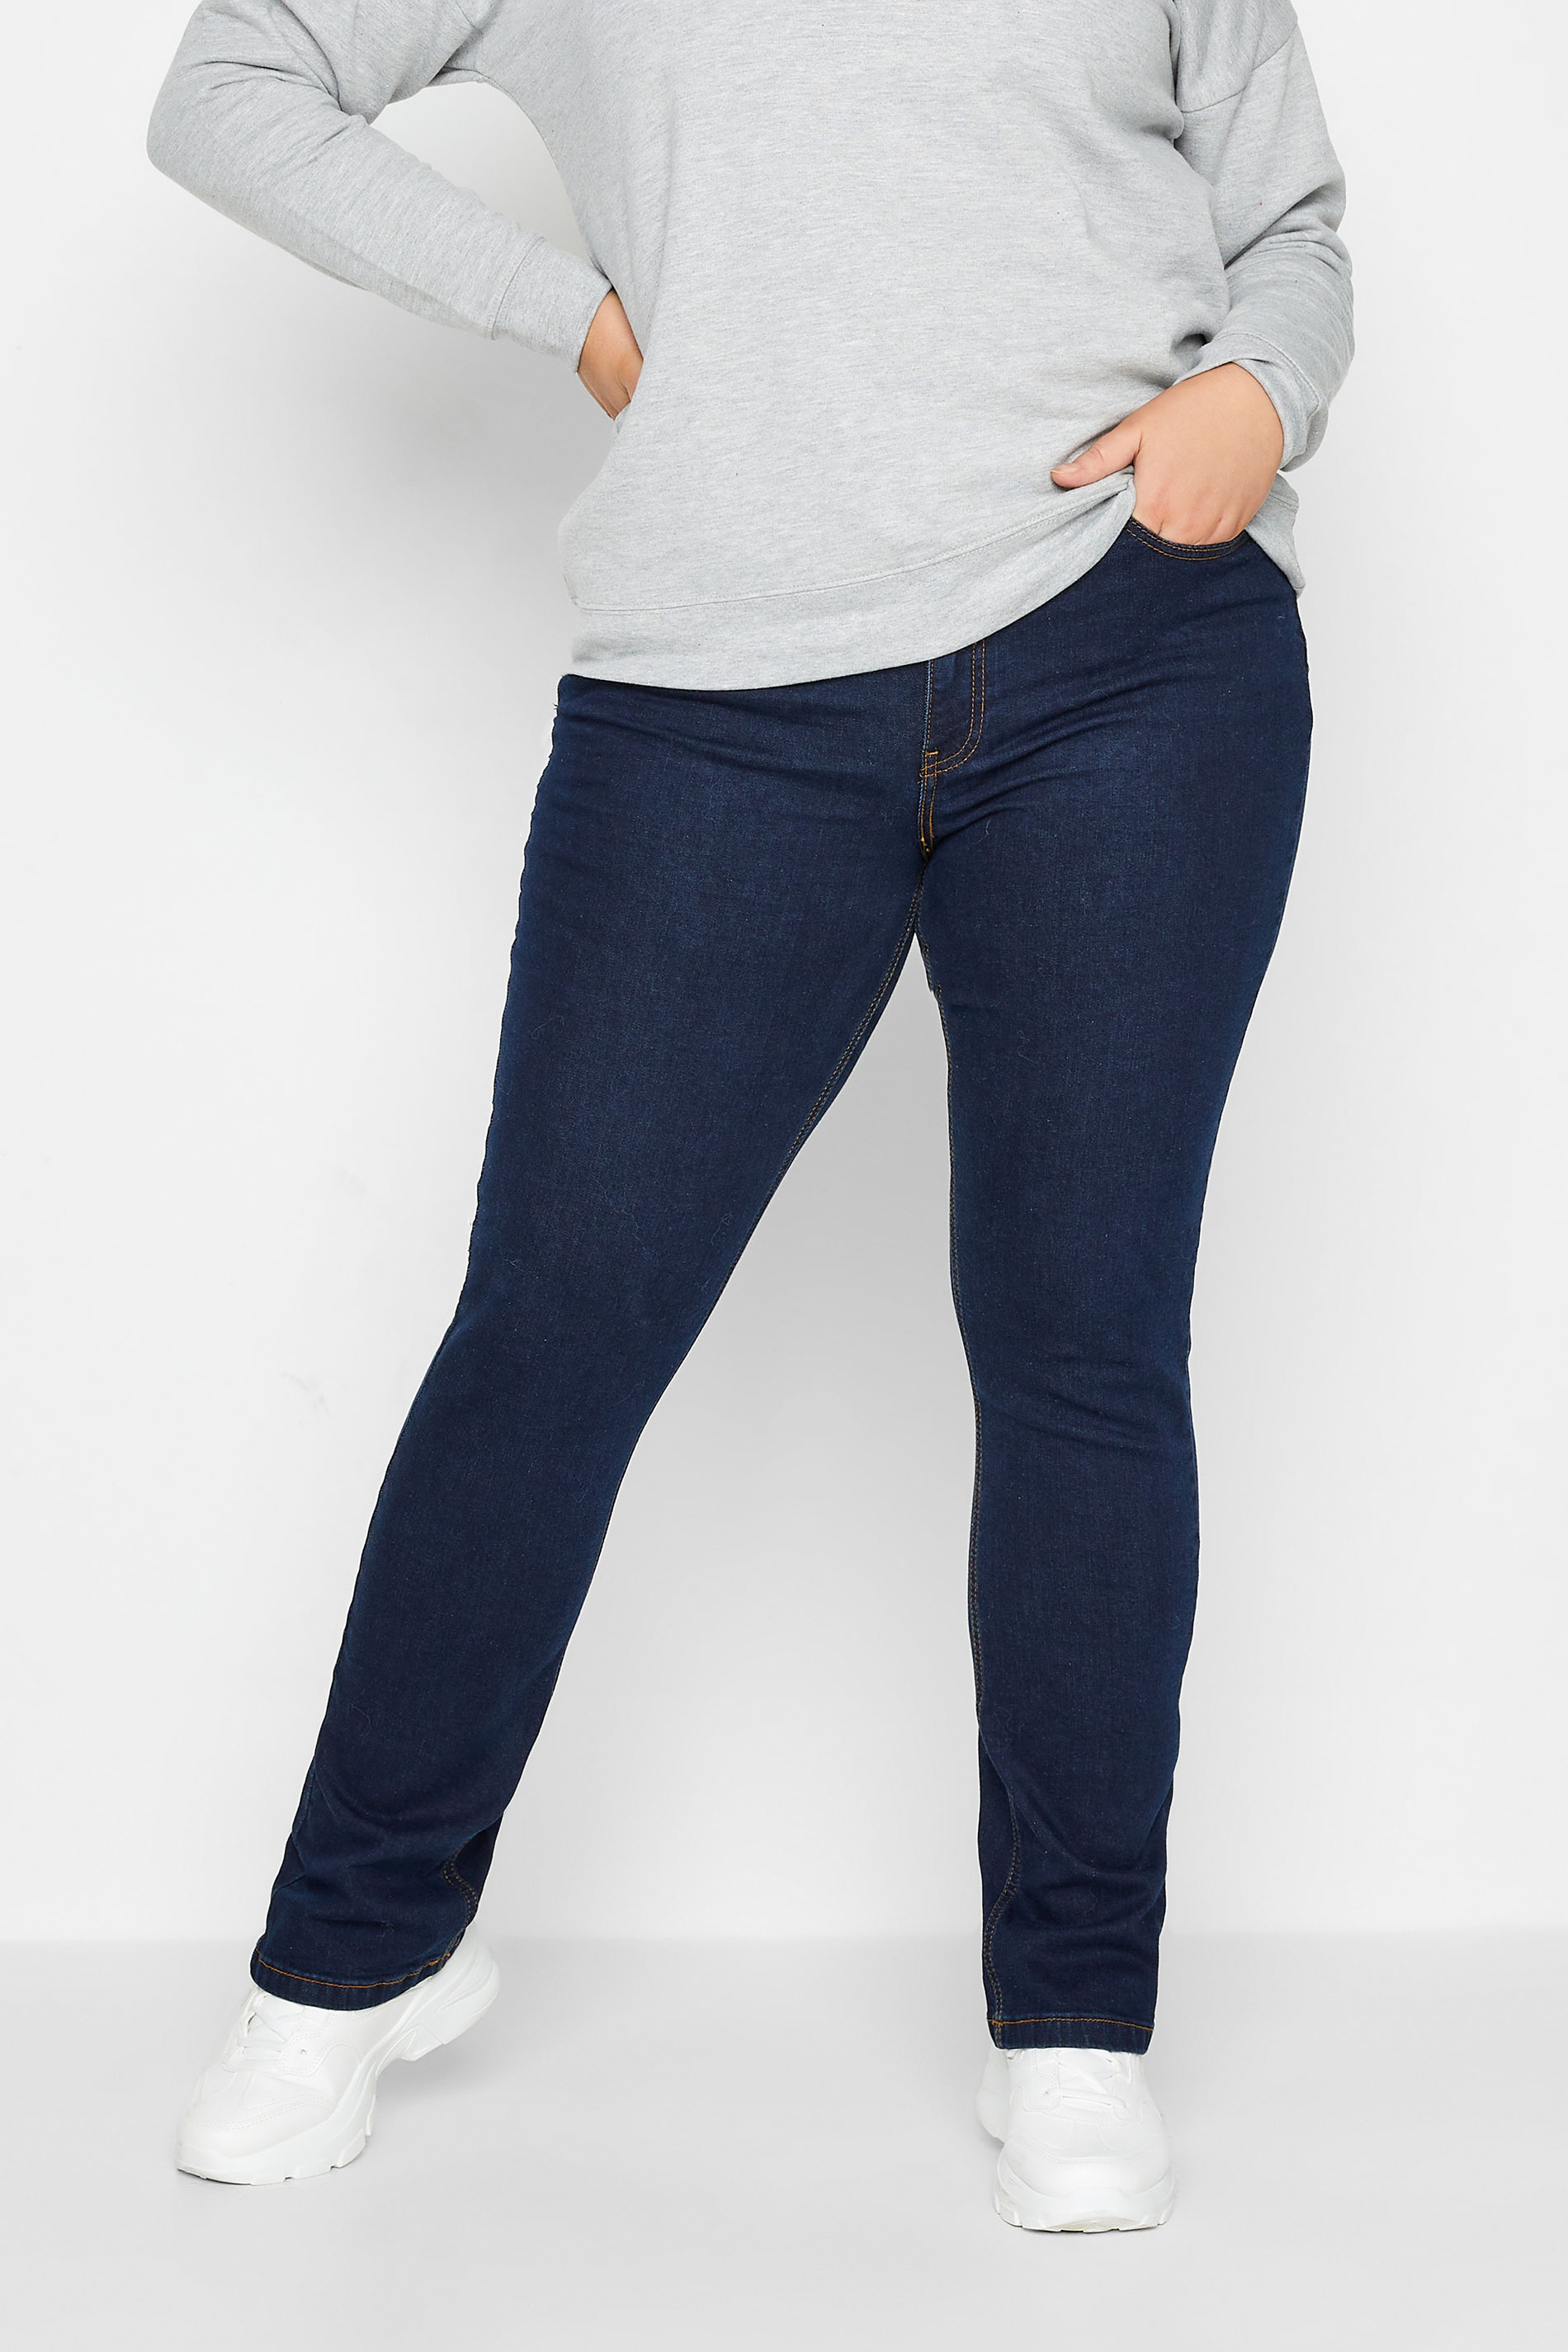 LTS Tall Women's Indigo Blue MIA Slim Leg Jeans | Long Tall Sally 1